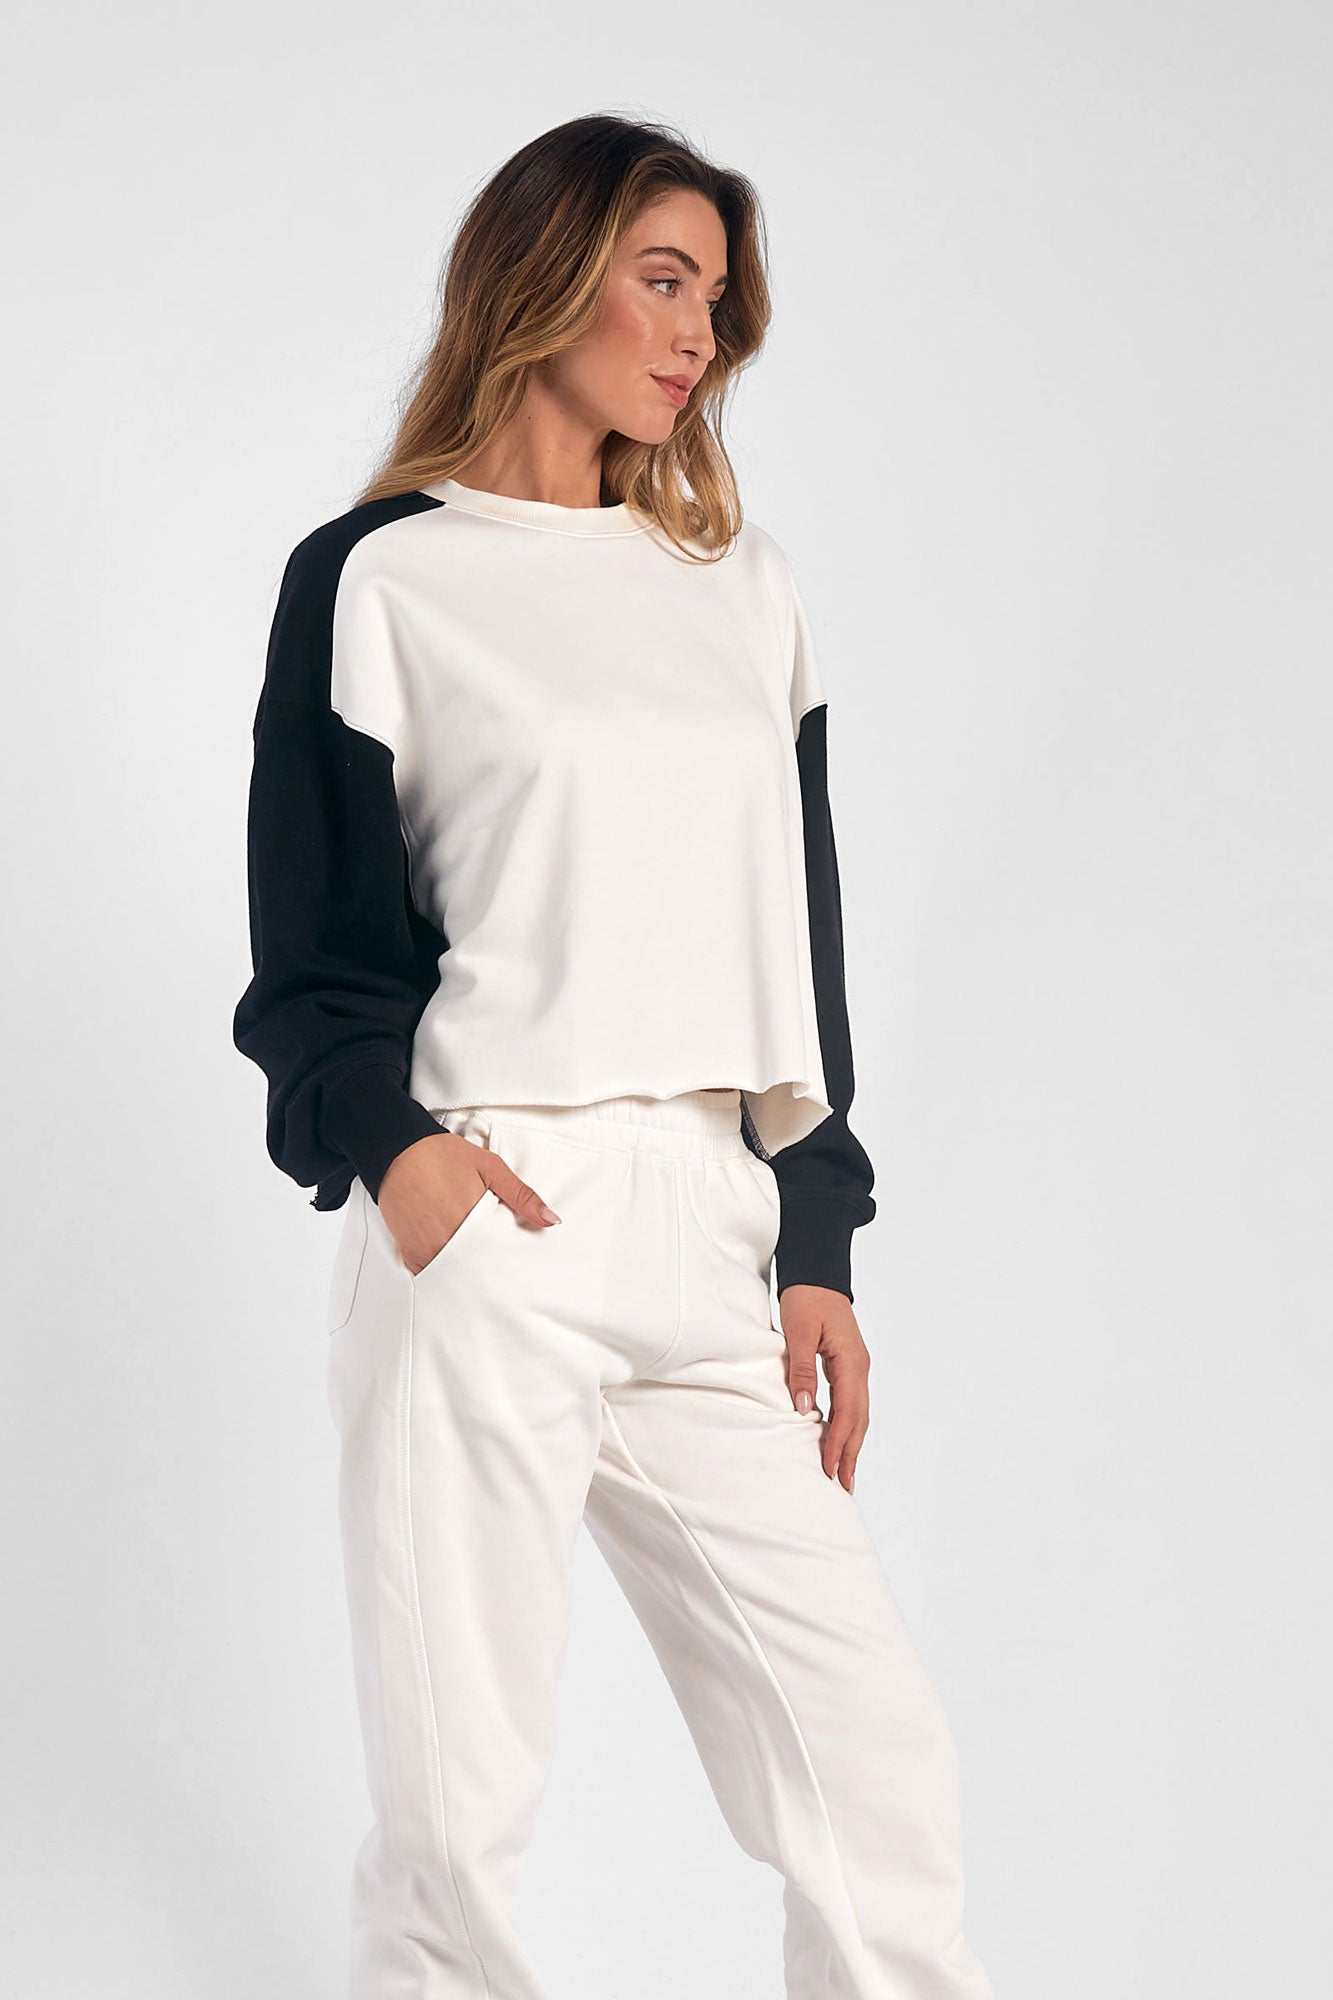 Colorblock Blk/white sweatshirt